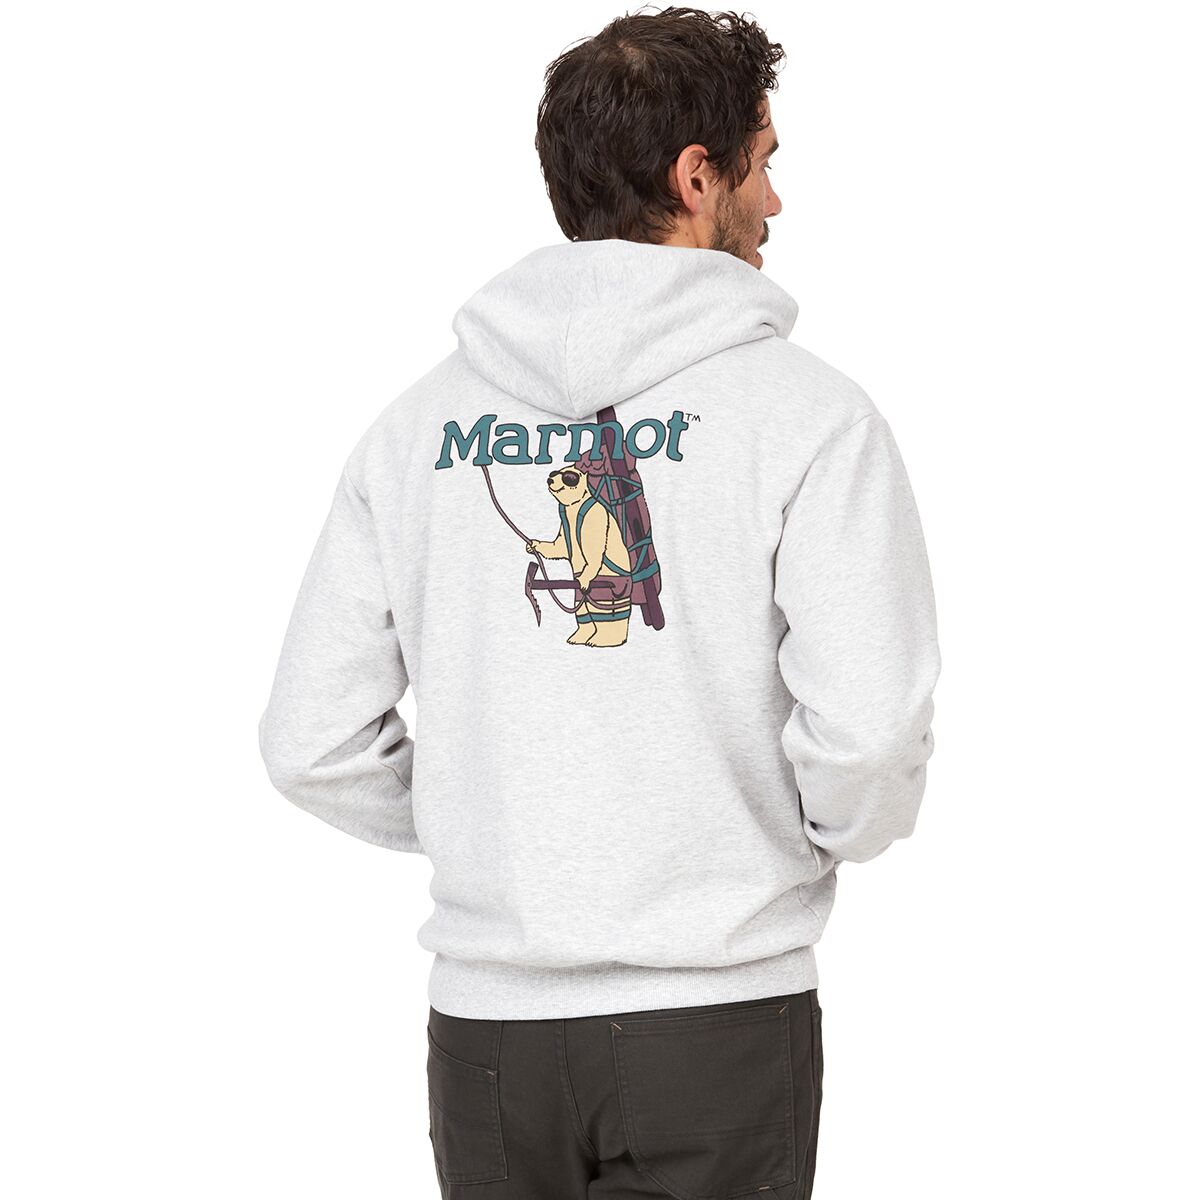 Marmot Backcountry Marty Hoodie - Men's